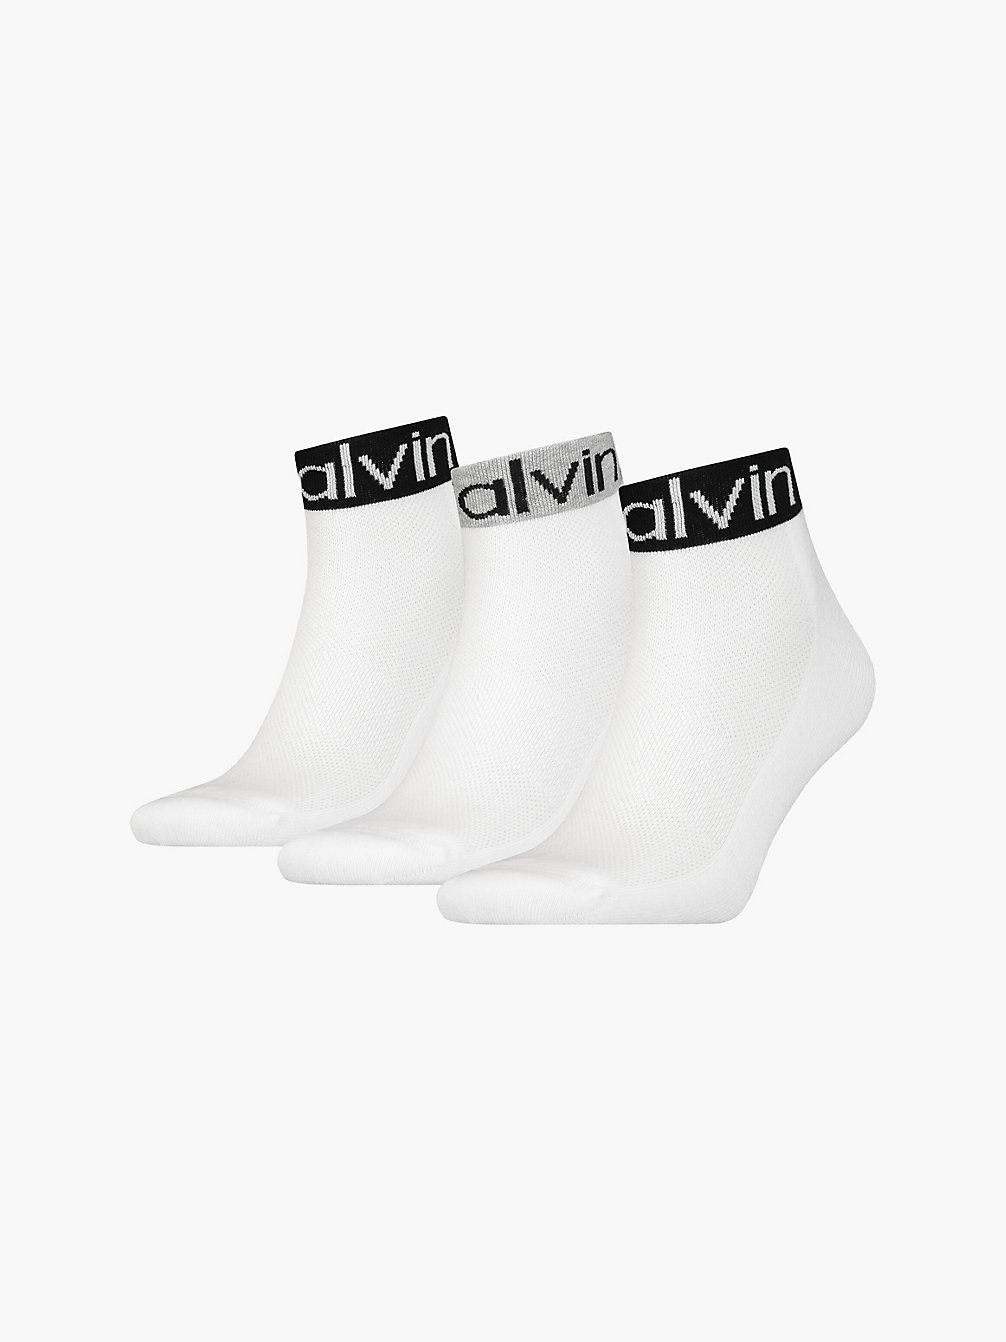 WHITE > Zestaw 3 Par Skarpet Do Kostek Z Logo > undefined Mężczyźni - Calvin Klein